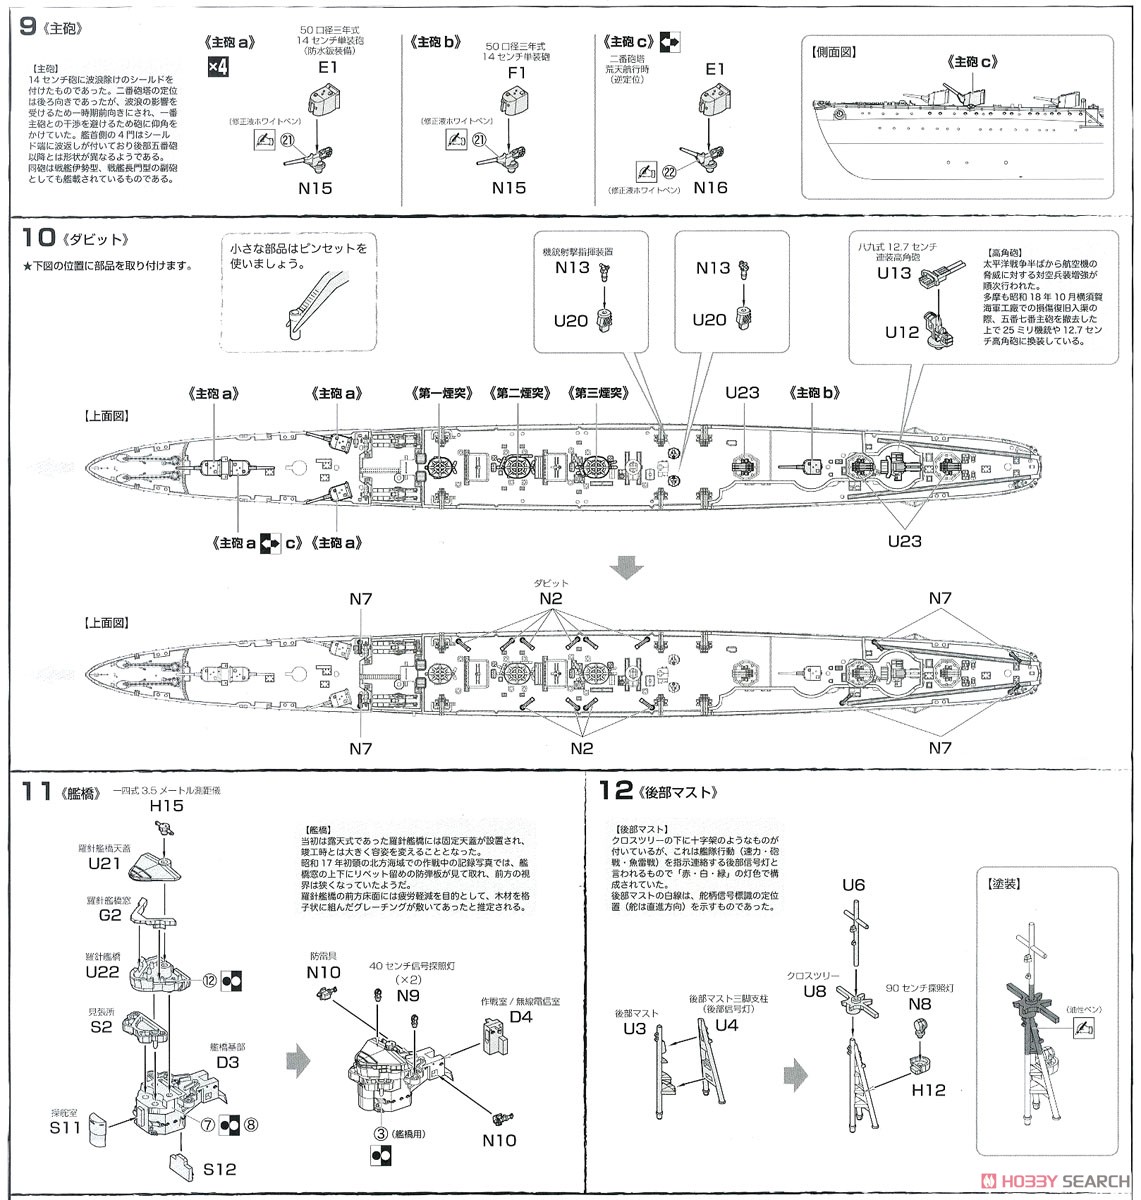 日本海軍軽巡洋艦 多摩 昭和19年/捷一号作戦 (プラモデル) 設計図3